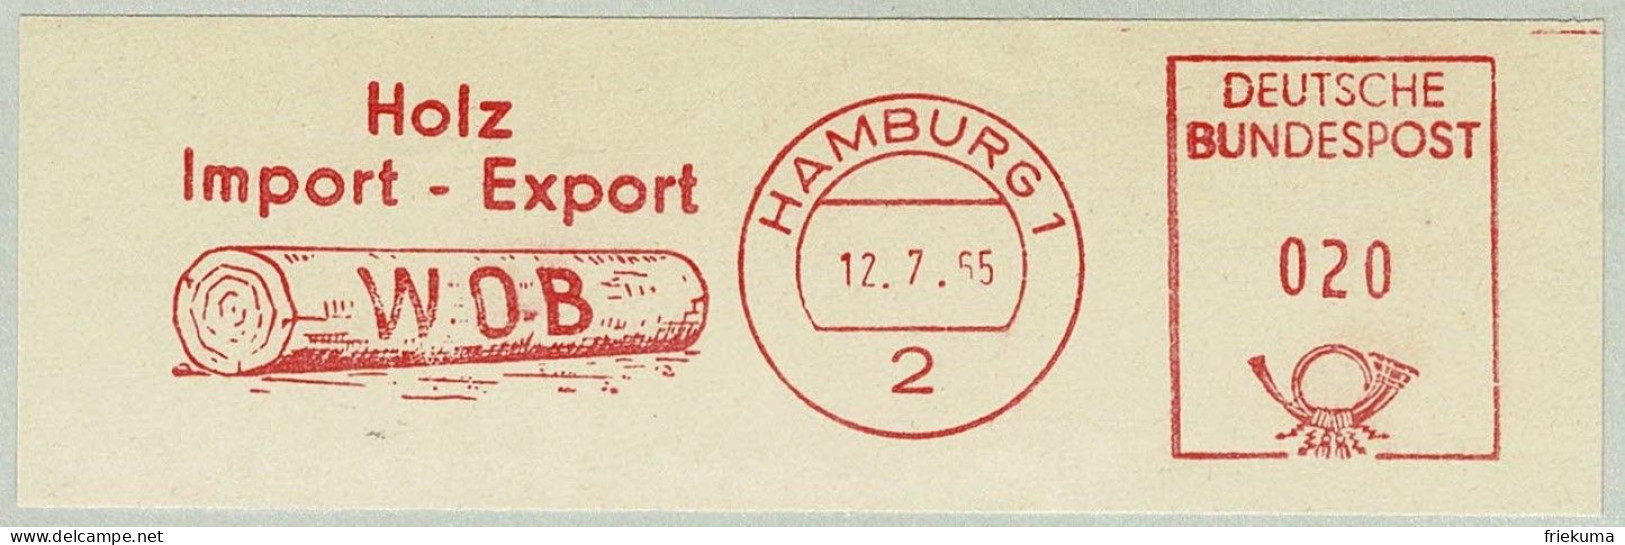 Deutsche Bundespost 1965, Freistempel / EMA / Meterstamp WOB Hamburg, Holz / Bois / Wood, Import, Export - Usines & Industries